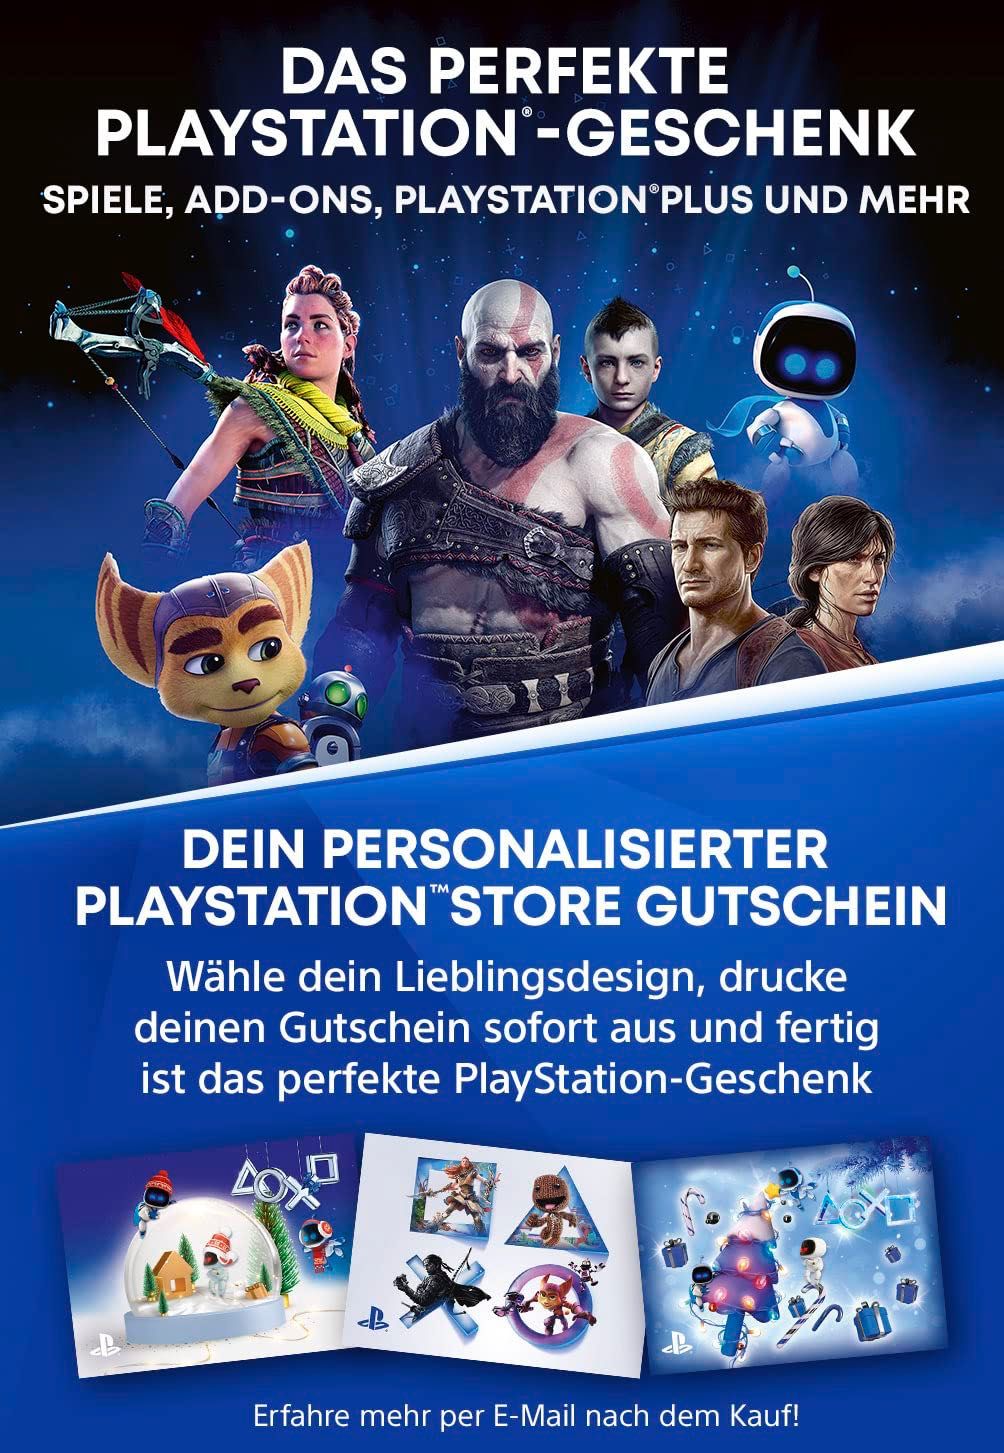 PSN 10 євро Playstation код ваучер (промокод)